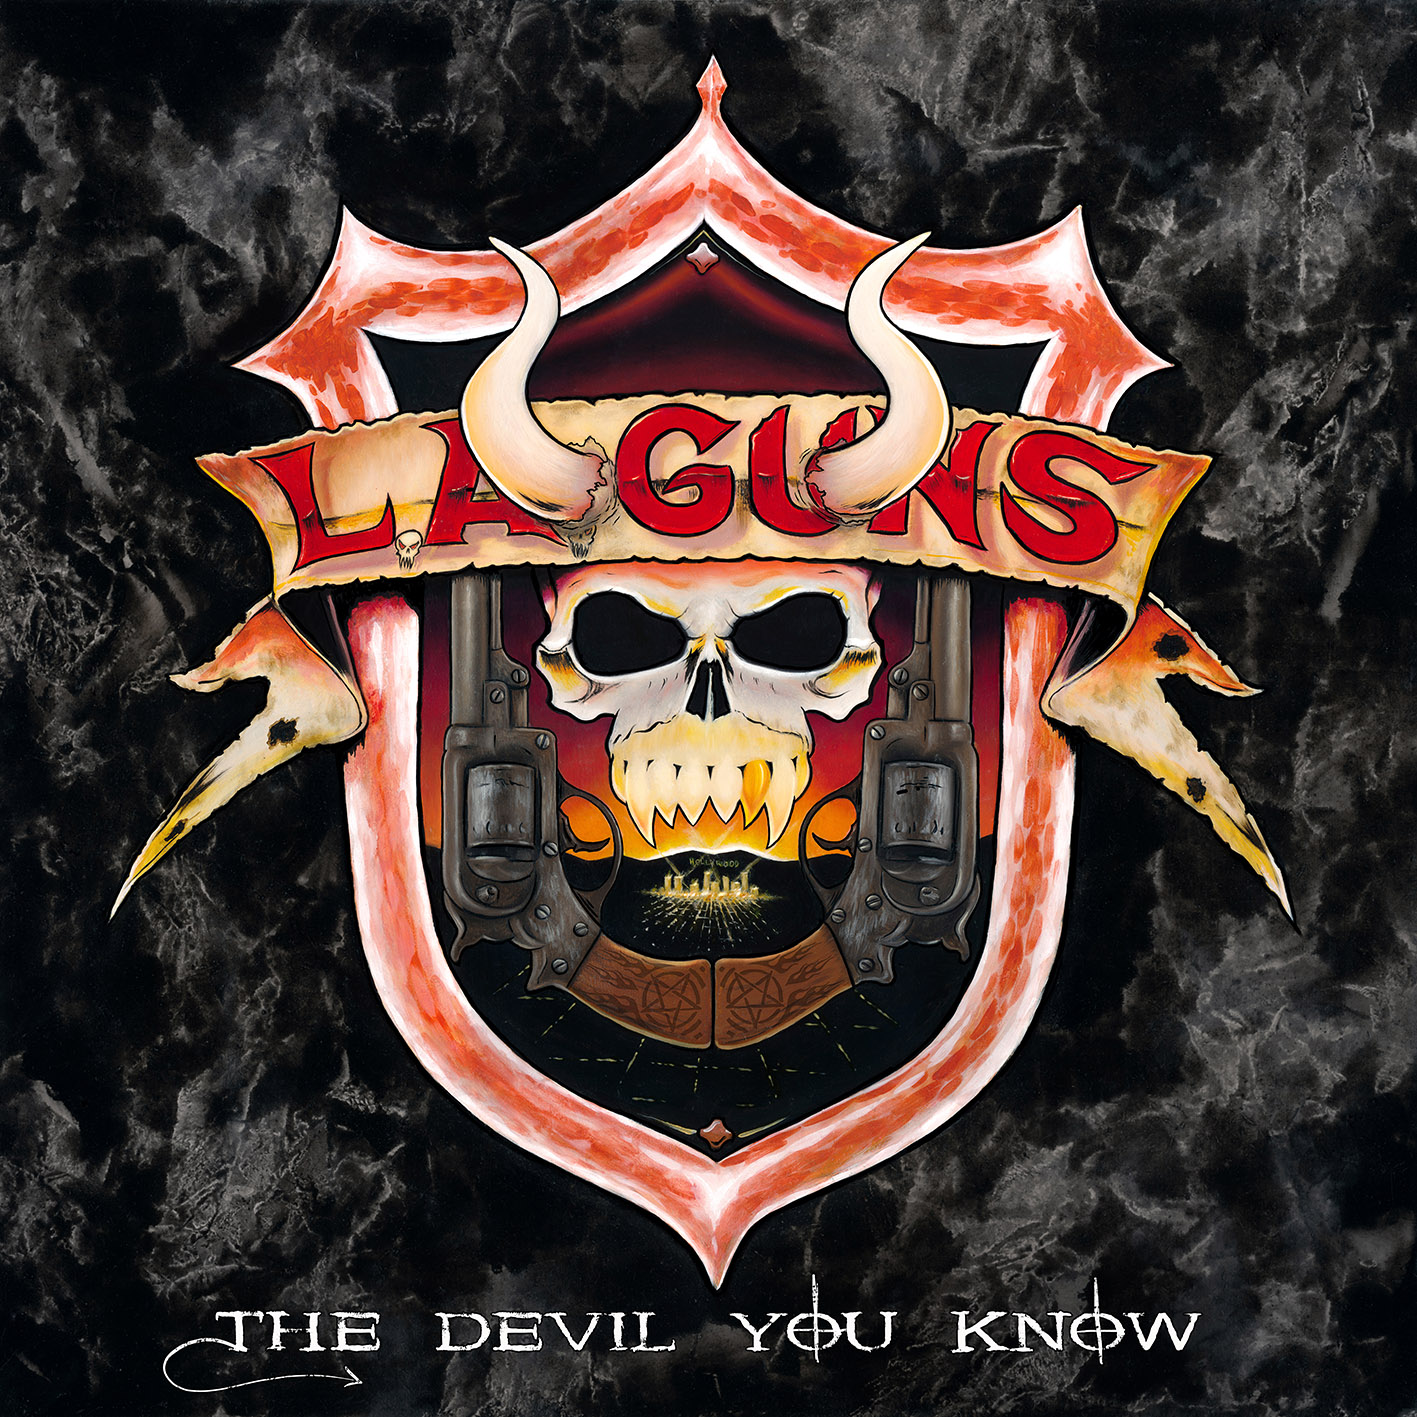 L.A. Guns - “The Devil You Know”